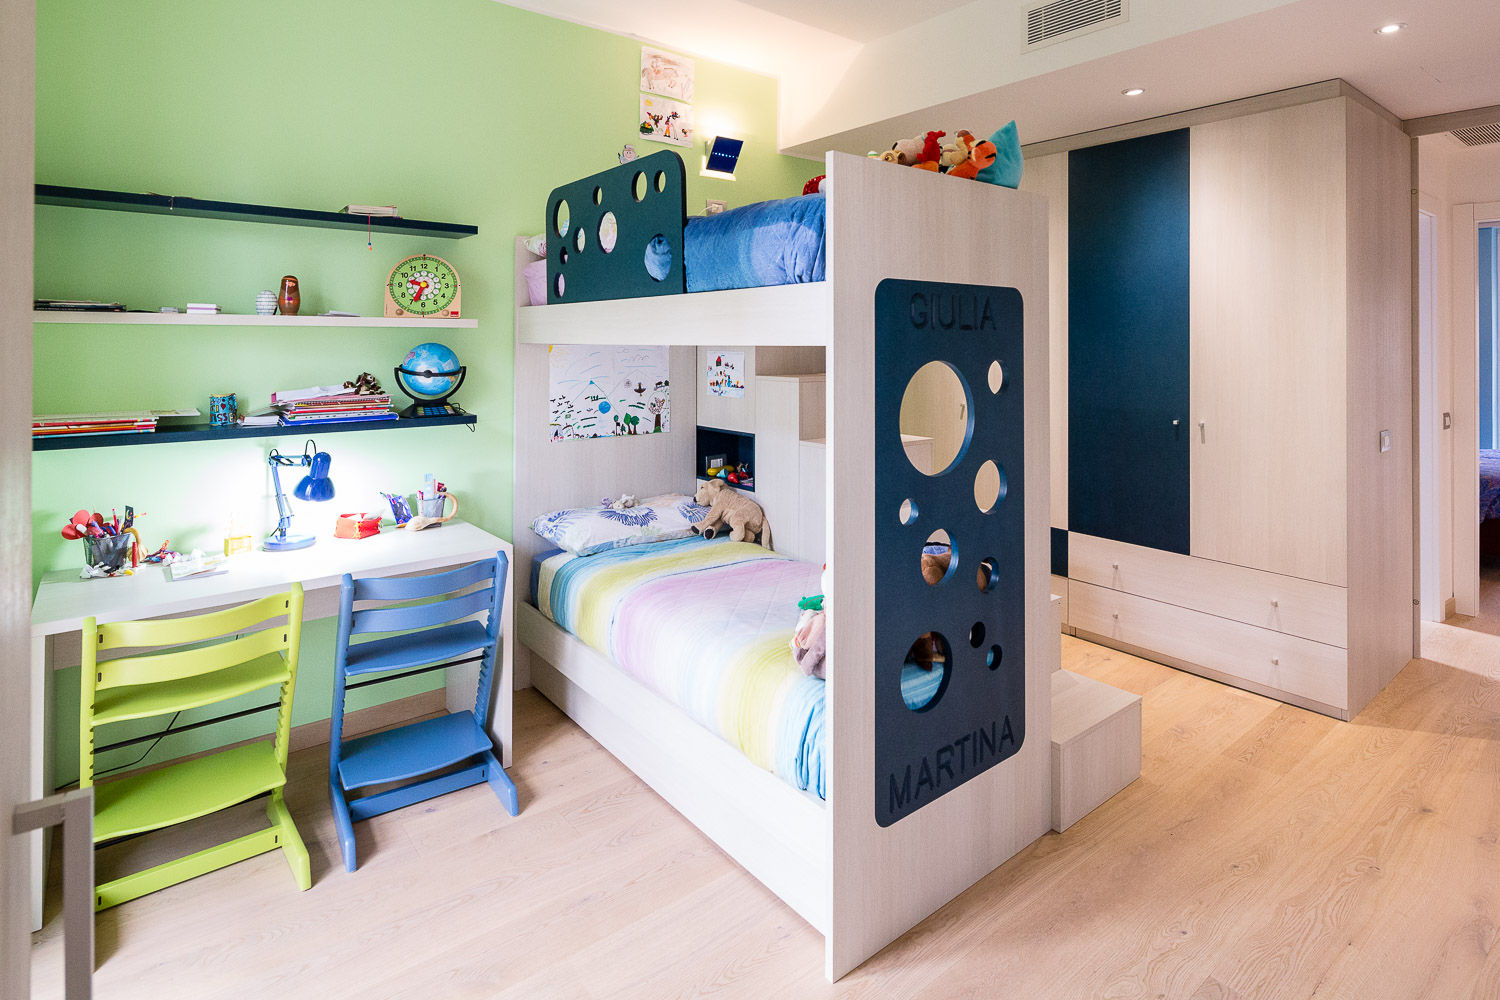 Five LIttle pigs, 23bassi studio di architettura 23bassi studio di architettura Dormitorios infantiles modernos